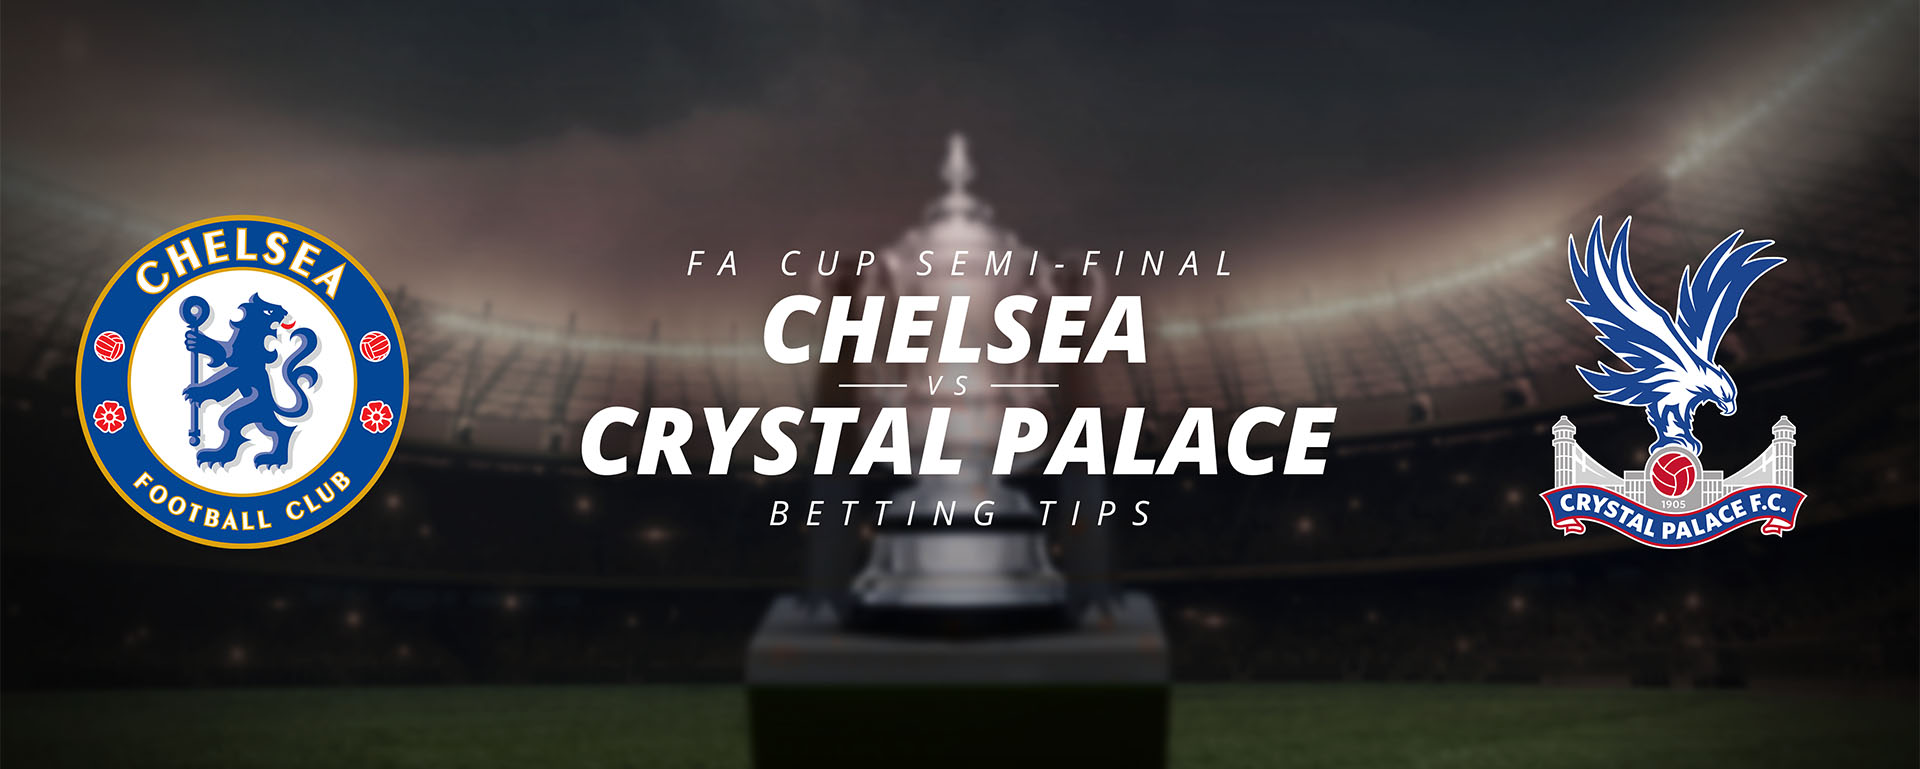 FA CUP SEMI-FINAL CHELSEA VS CRYSTAL PALACE: BETTING TIPS